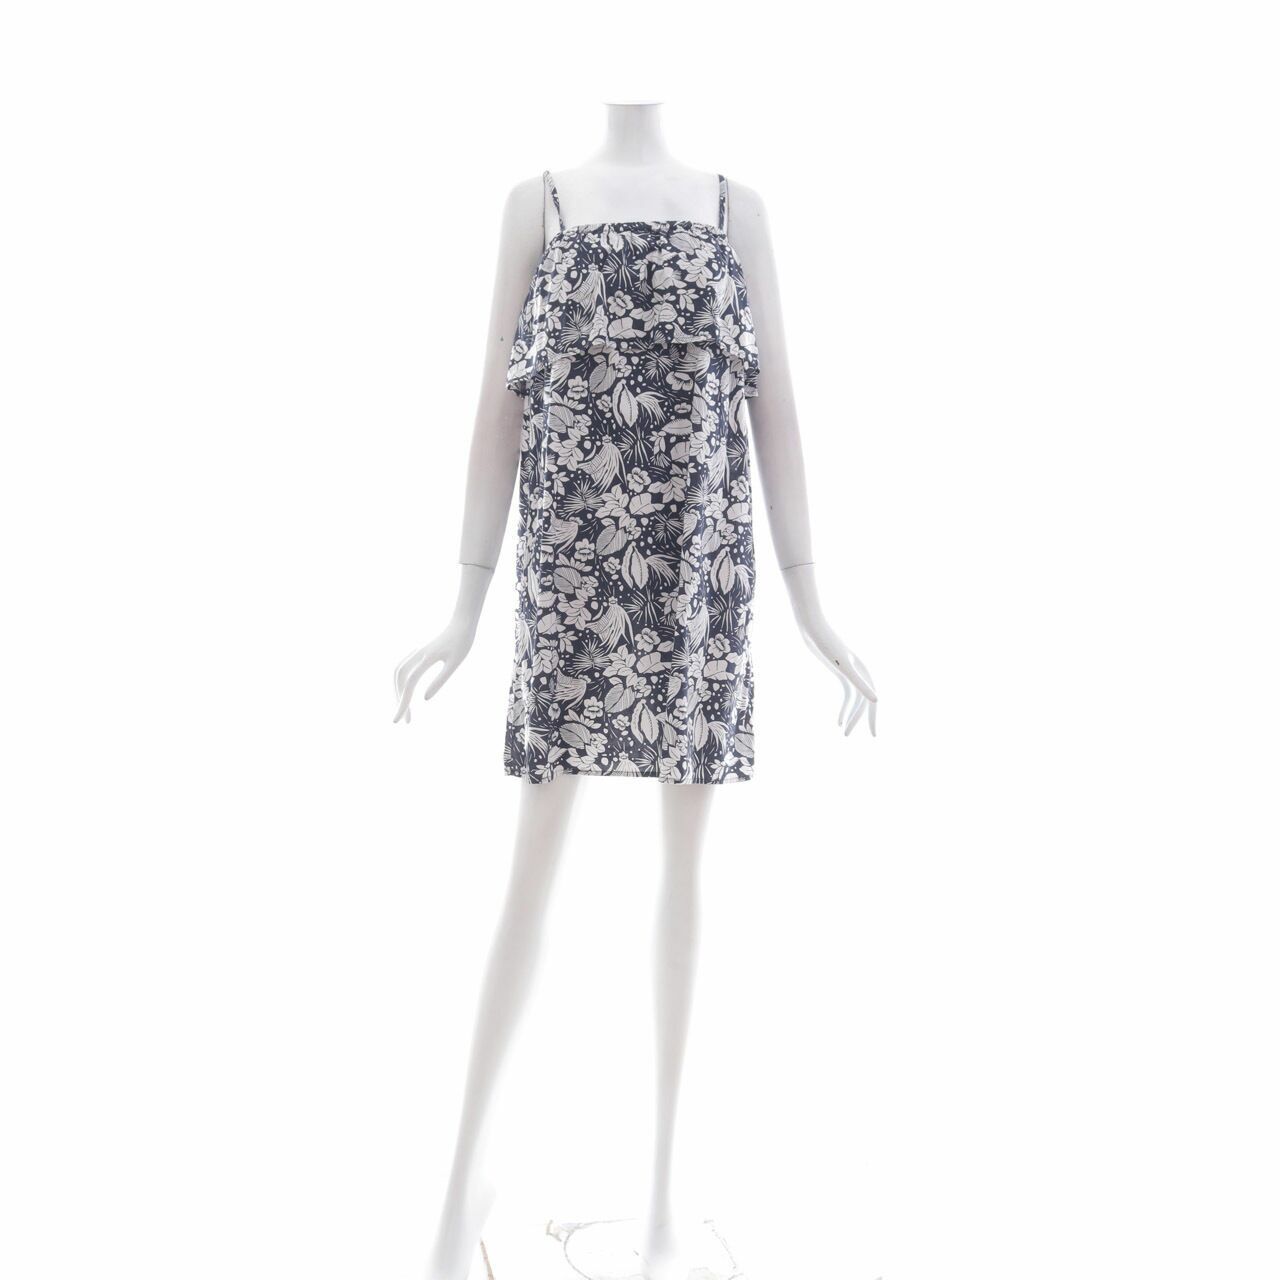 UNIQLO Navy/White Floral Mini Dress